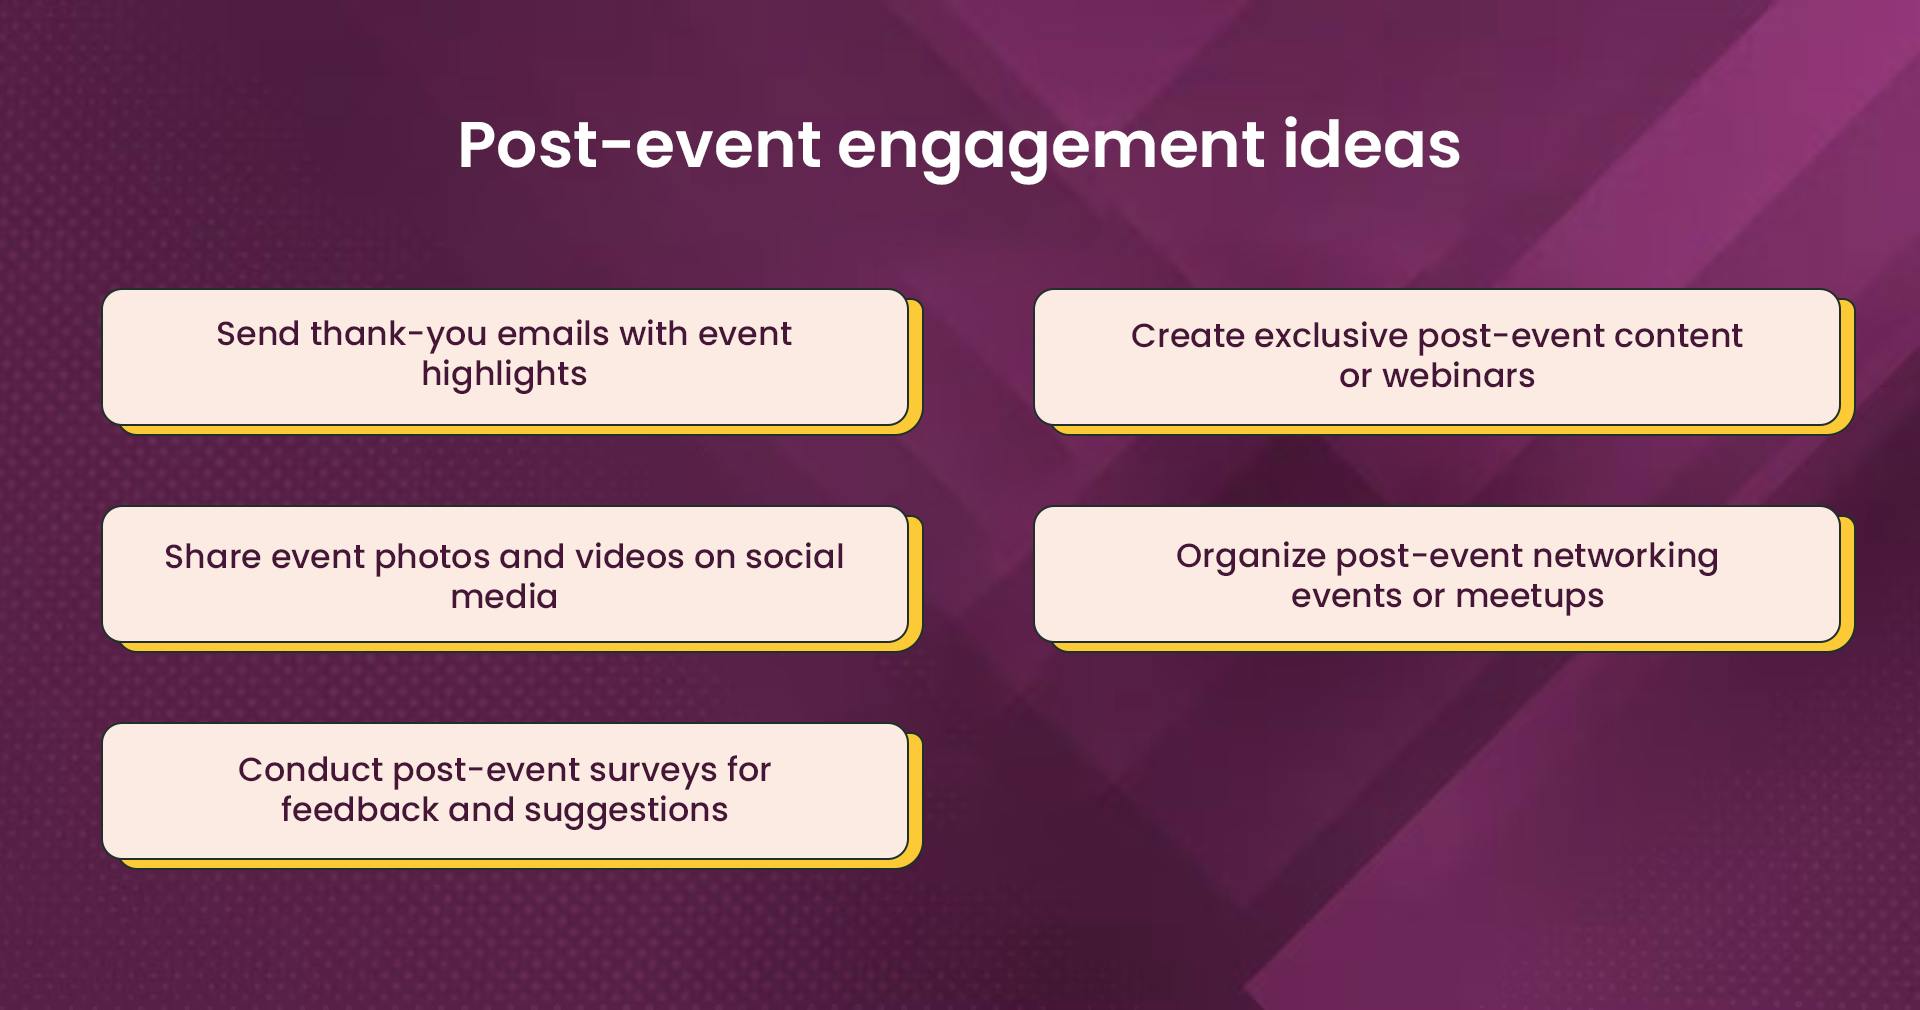 Post-event engagement ideas